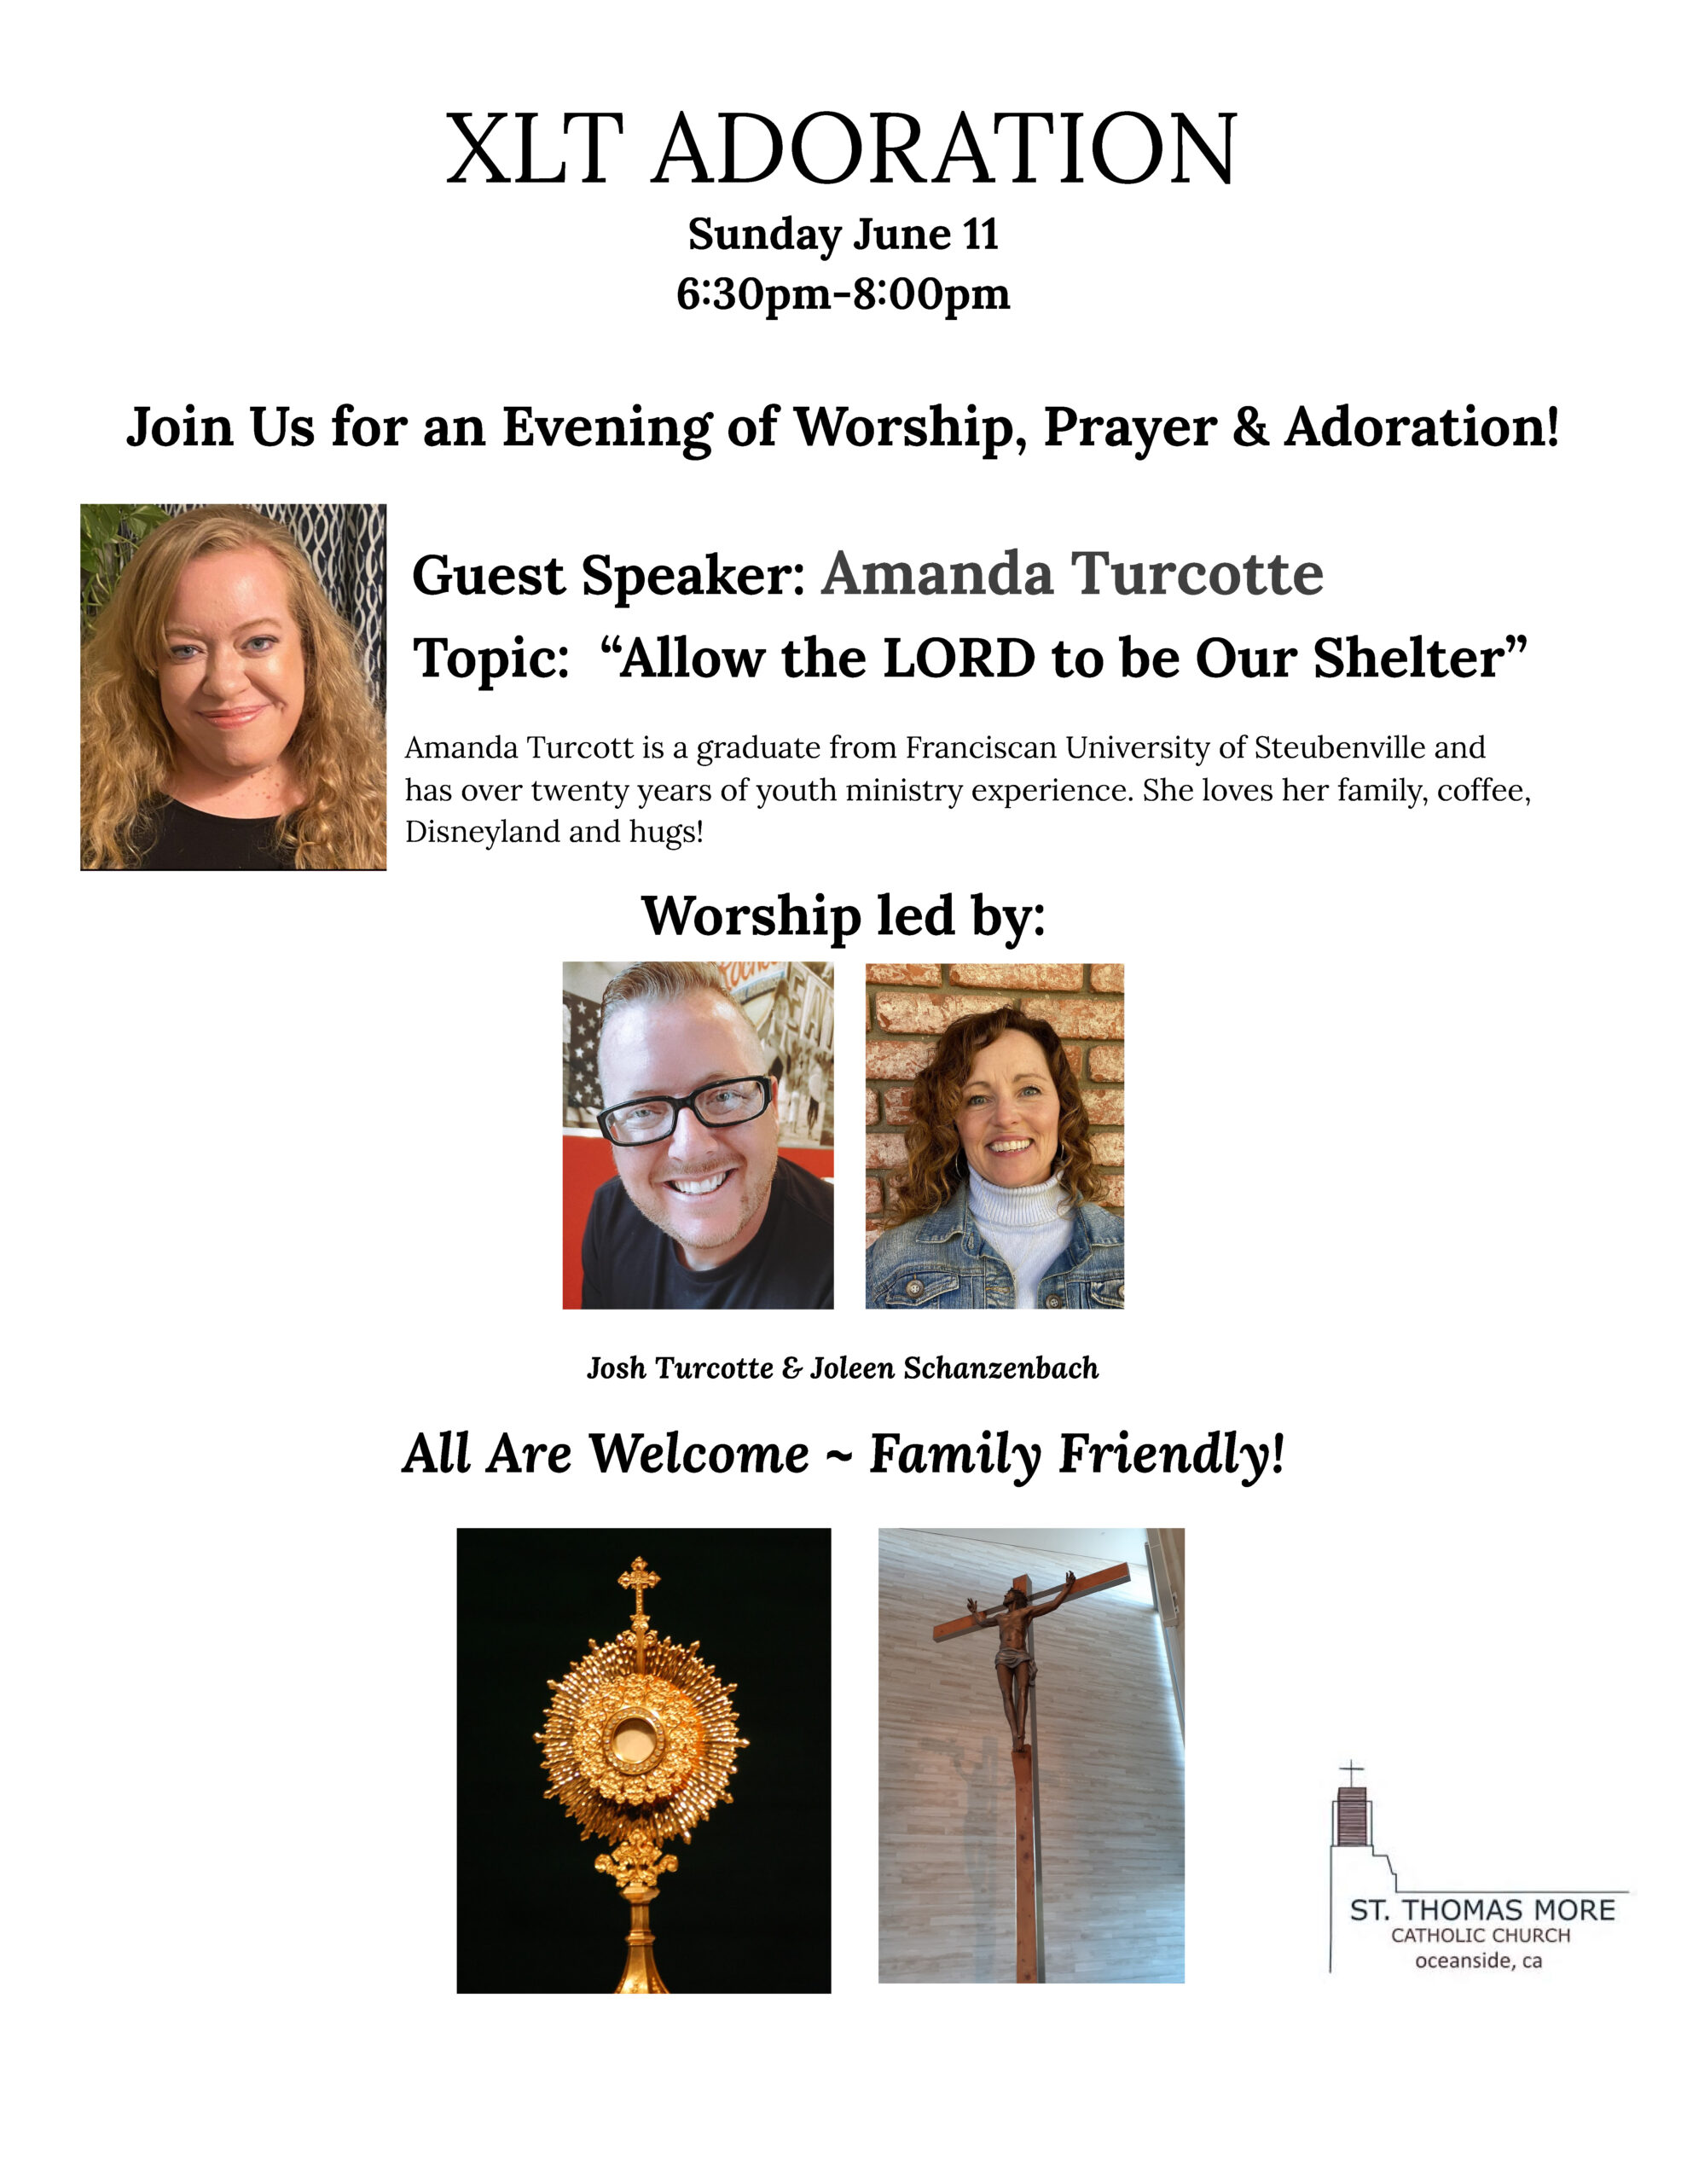 XLT Evening of Worship, Prayer, and Adoration, Sunday, June 11, 6:30pm